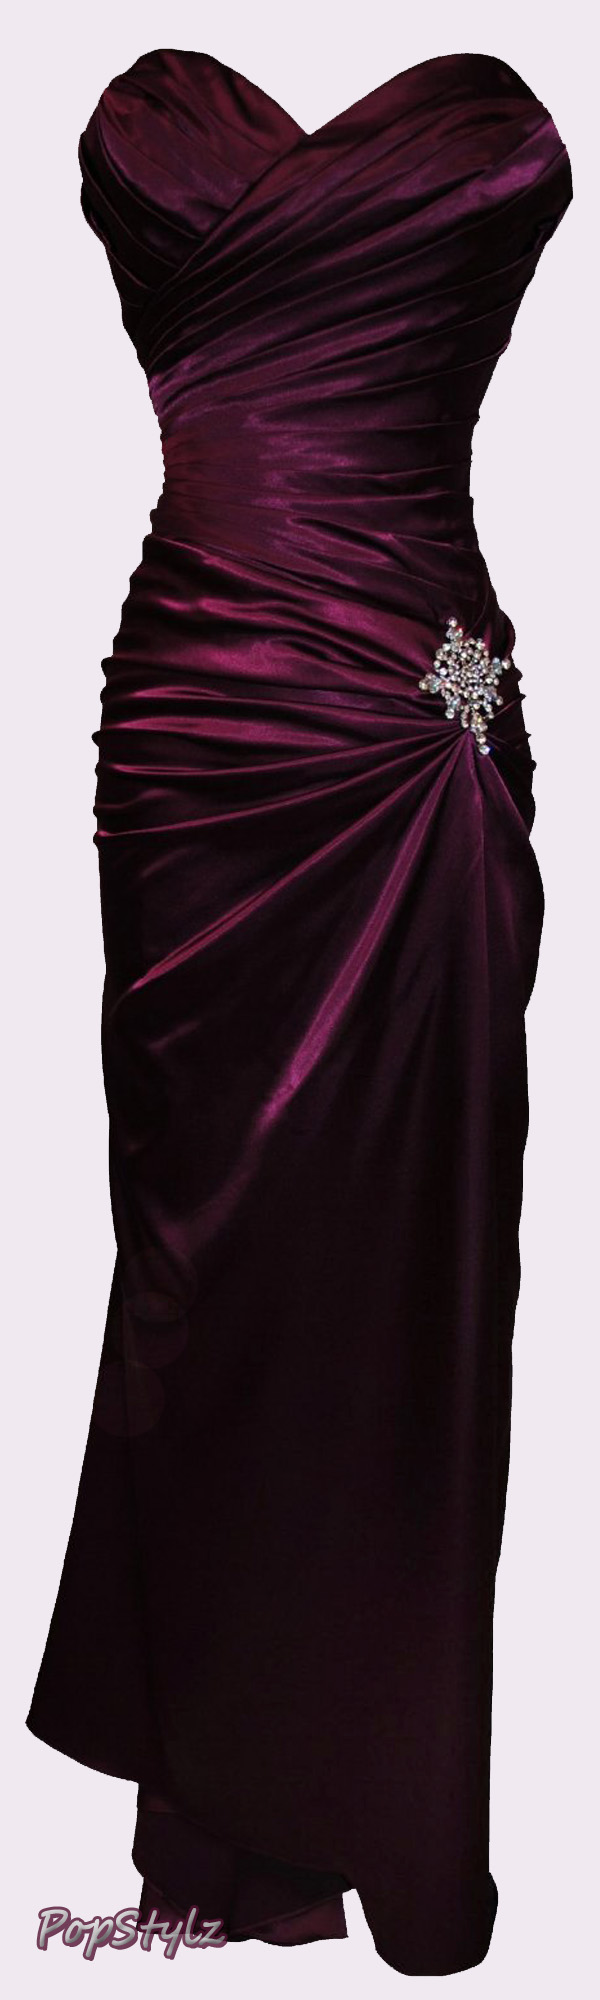 PacificPlex Strapless Burgundy Bridesmaid Dress